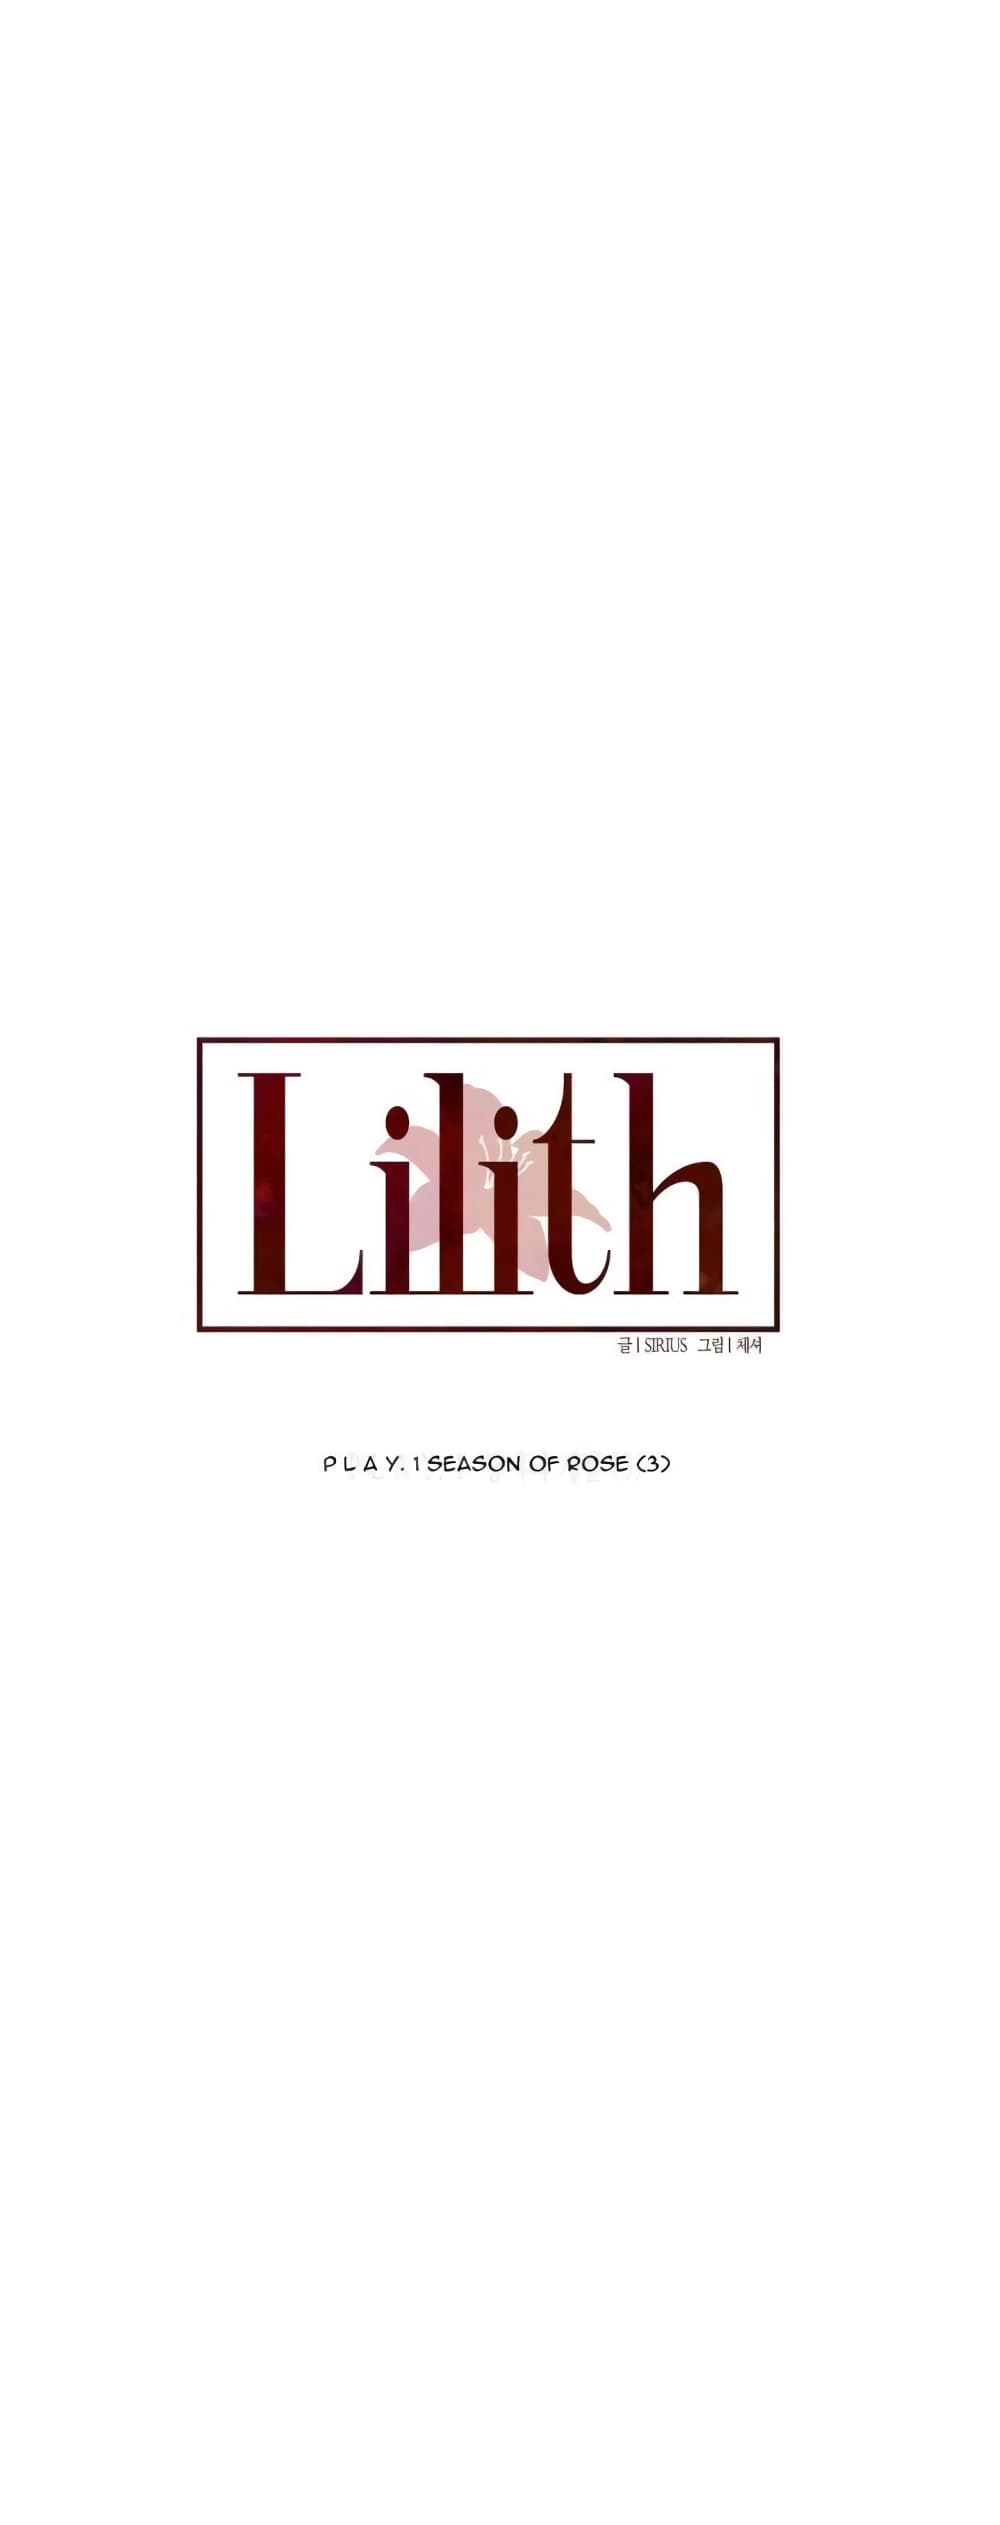 Lilith ตอนที่ 3 (6)